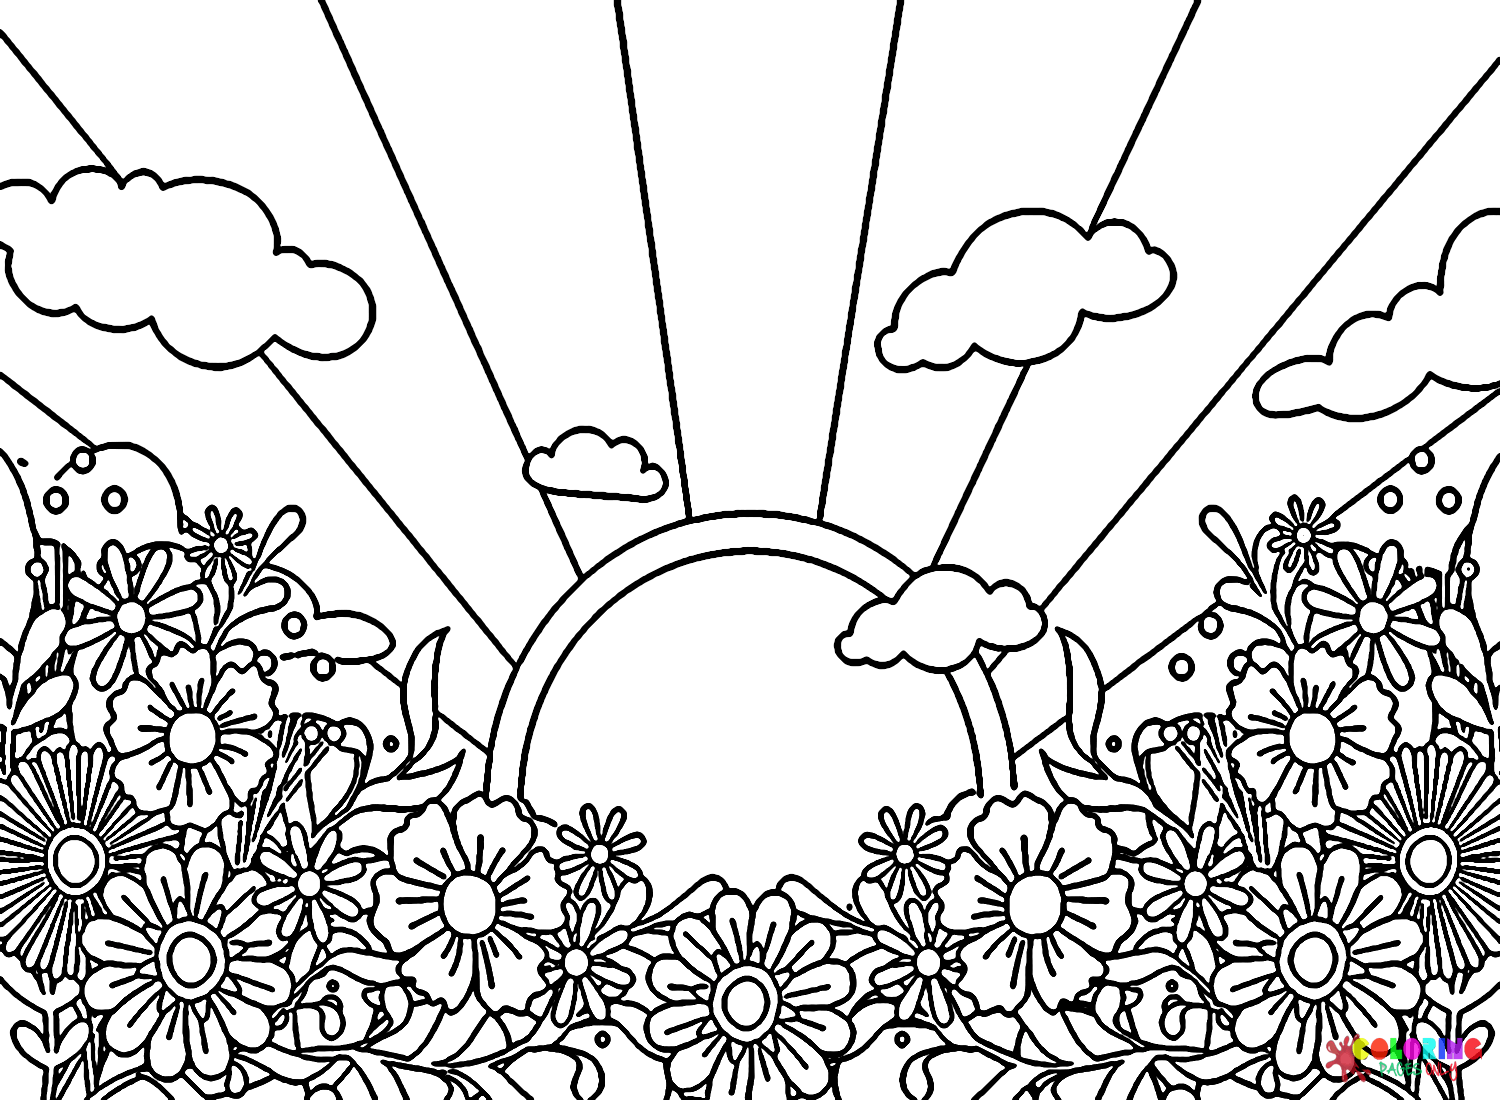 Hippie Sun with Flowers from Hippie